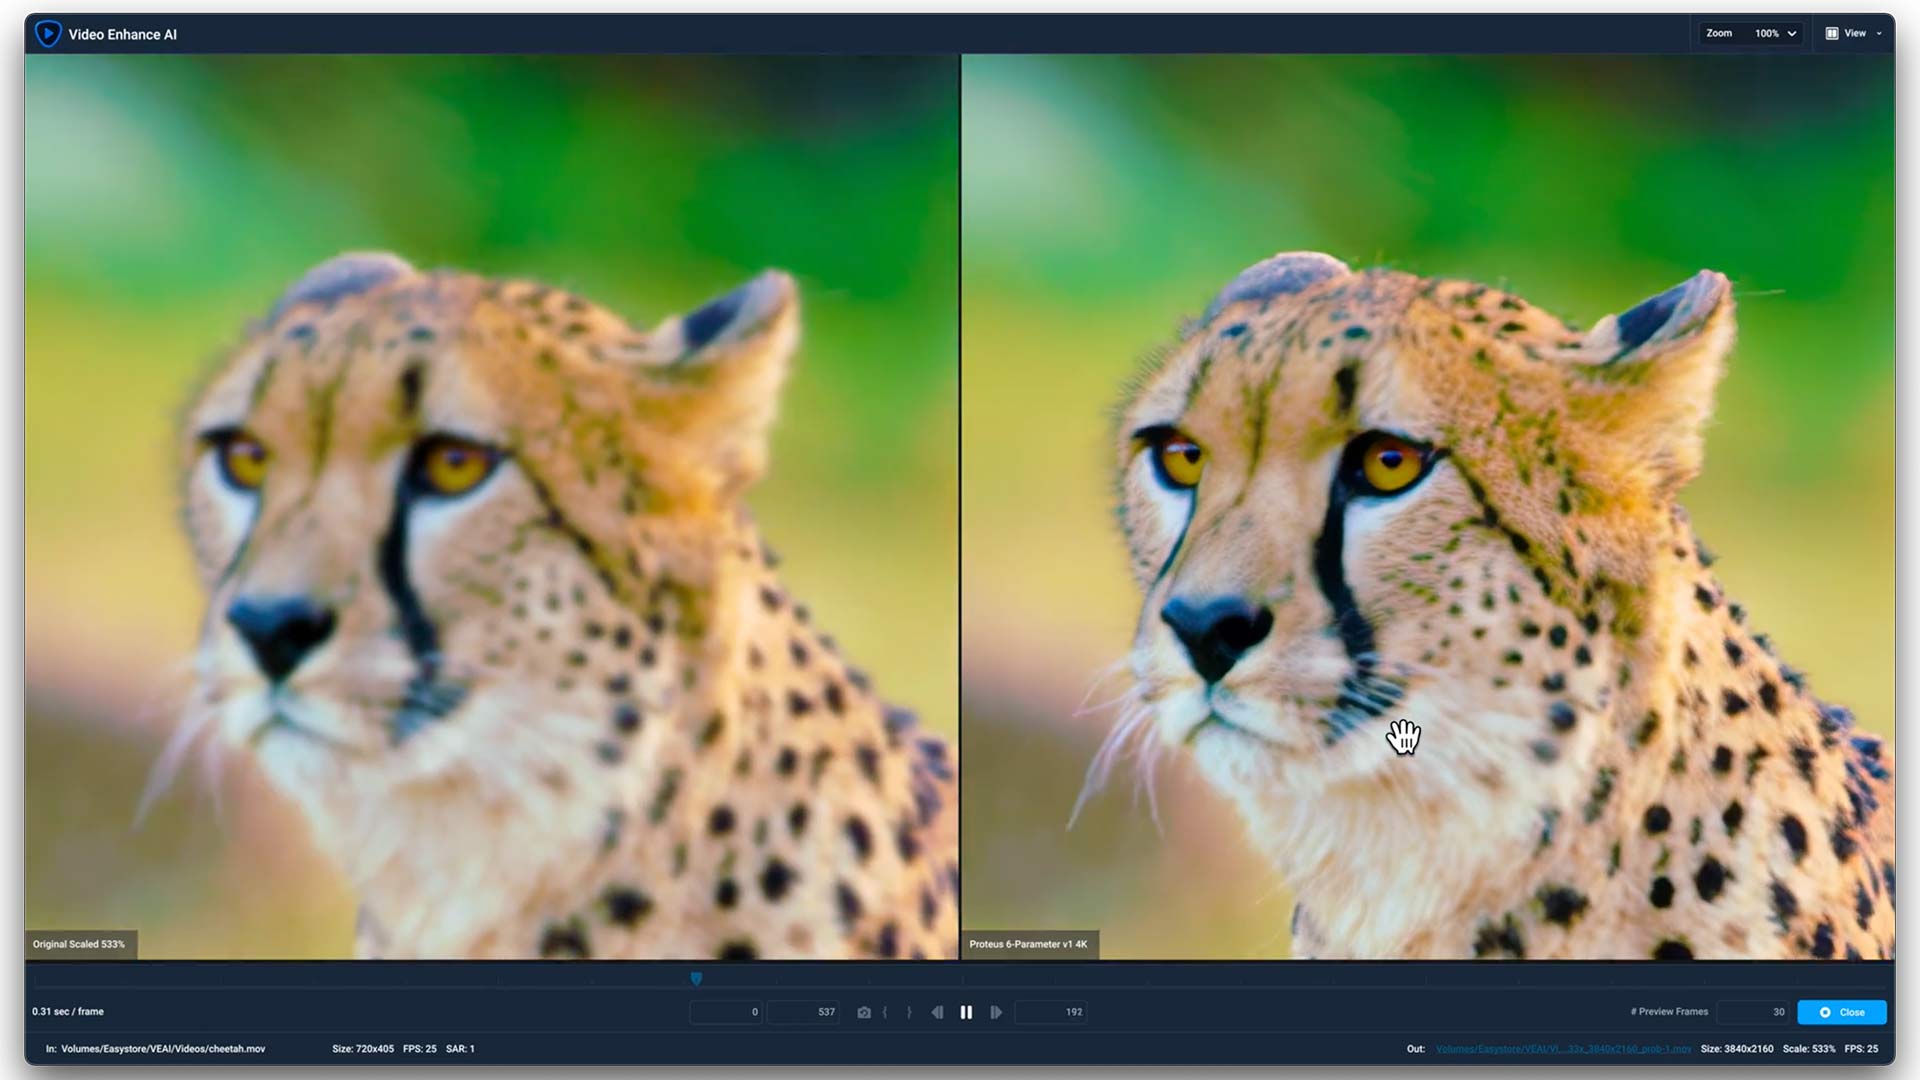 Topaz Video Enhance AI version 2.3 provides two new AI models. Image: Topaz Labs.